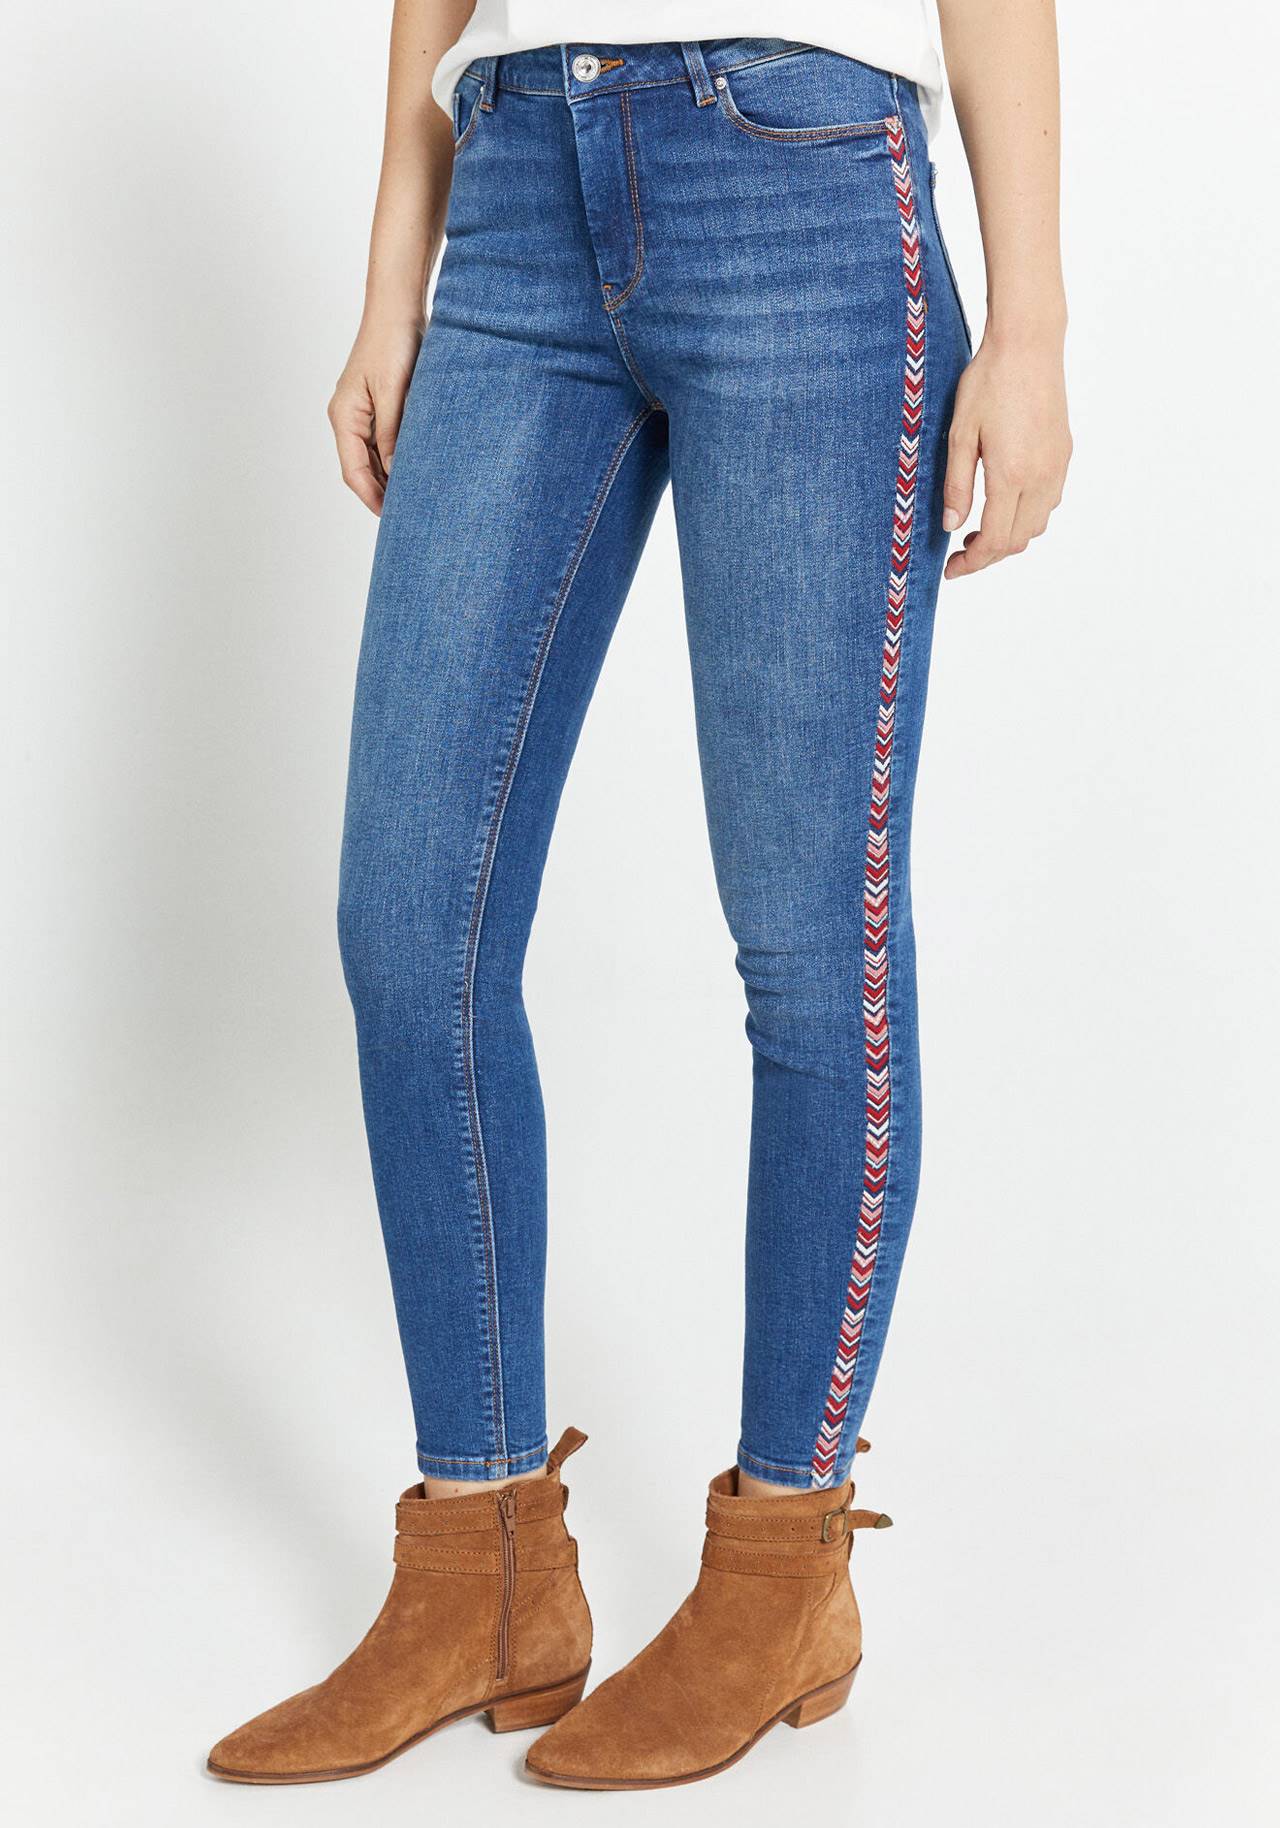 jeans tipazo otoño